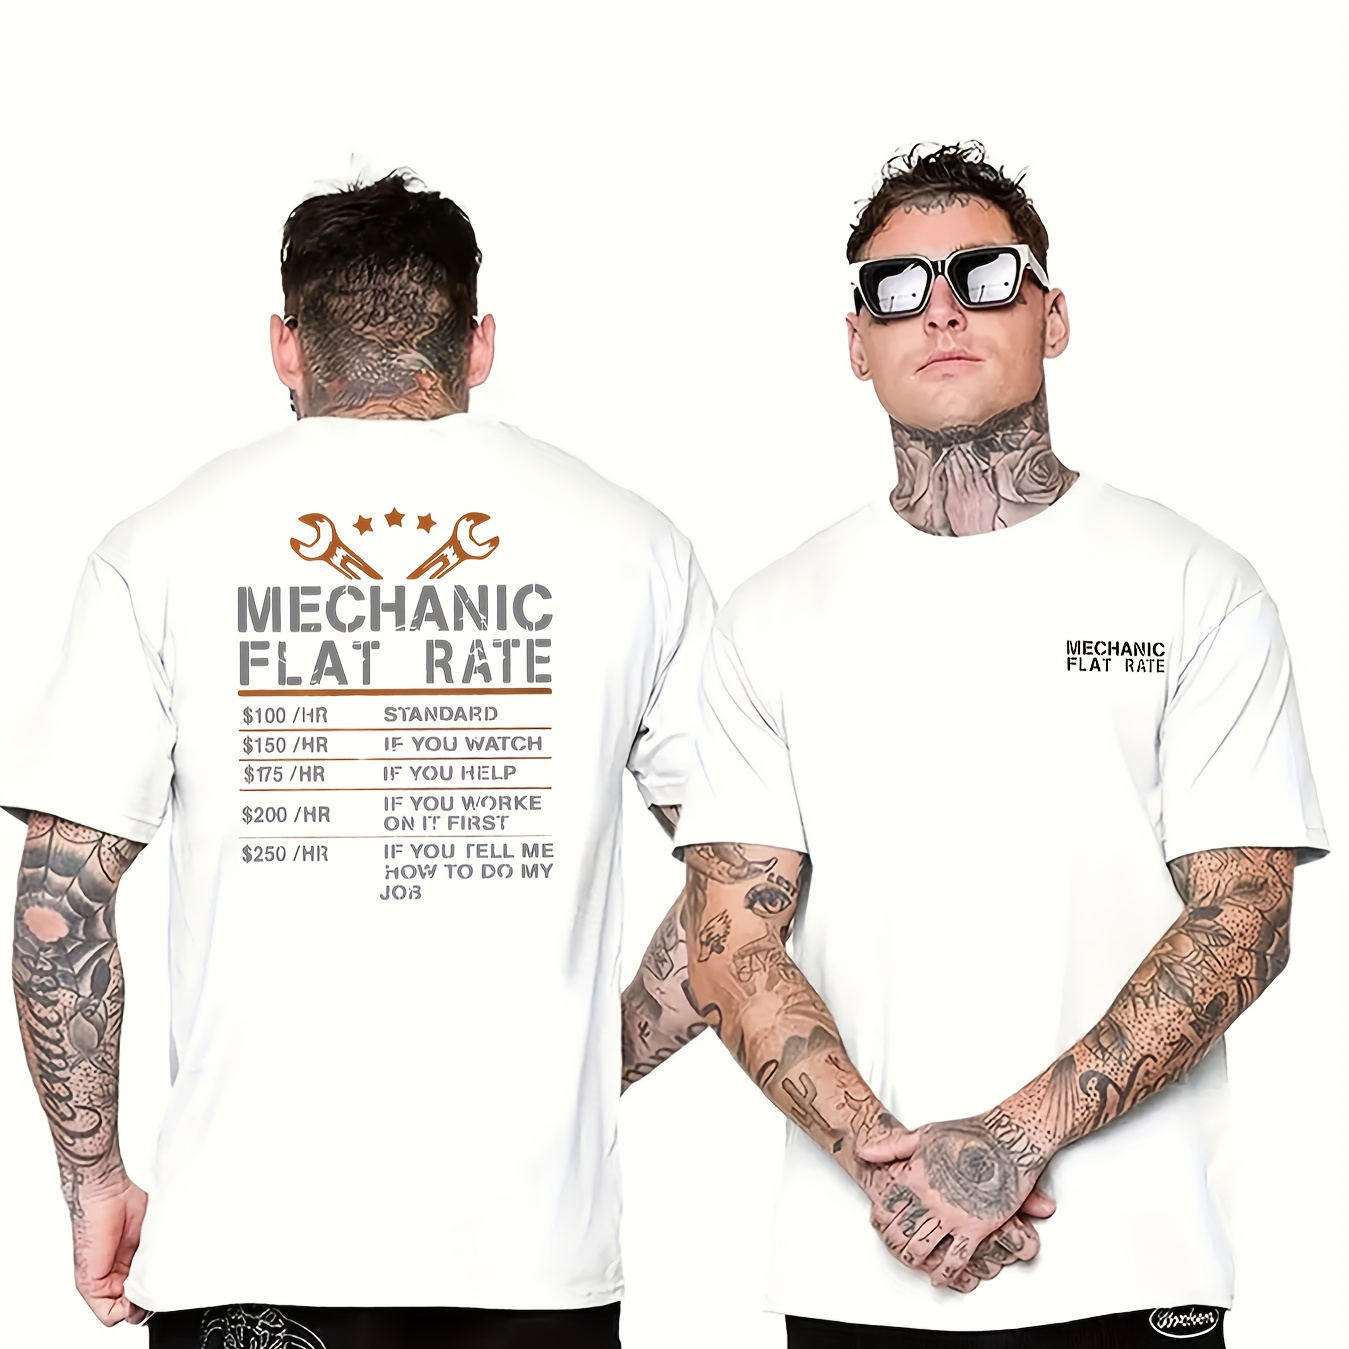 

Mechanic Flat Rate Print Men's Casual T-shirt, Short Sleeve Versatile Comfy Tee Tops For Summer Outdoor